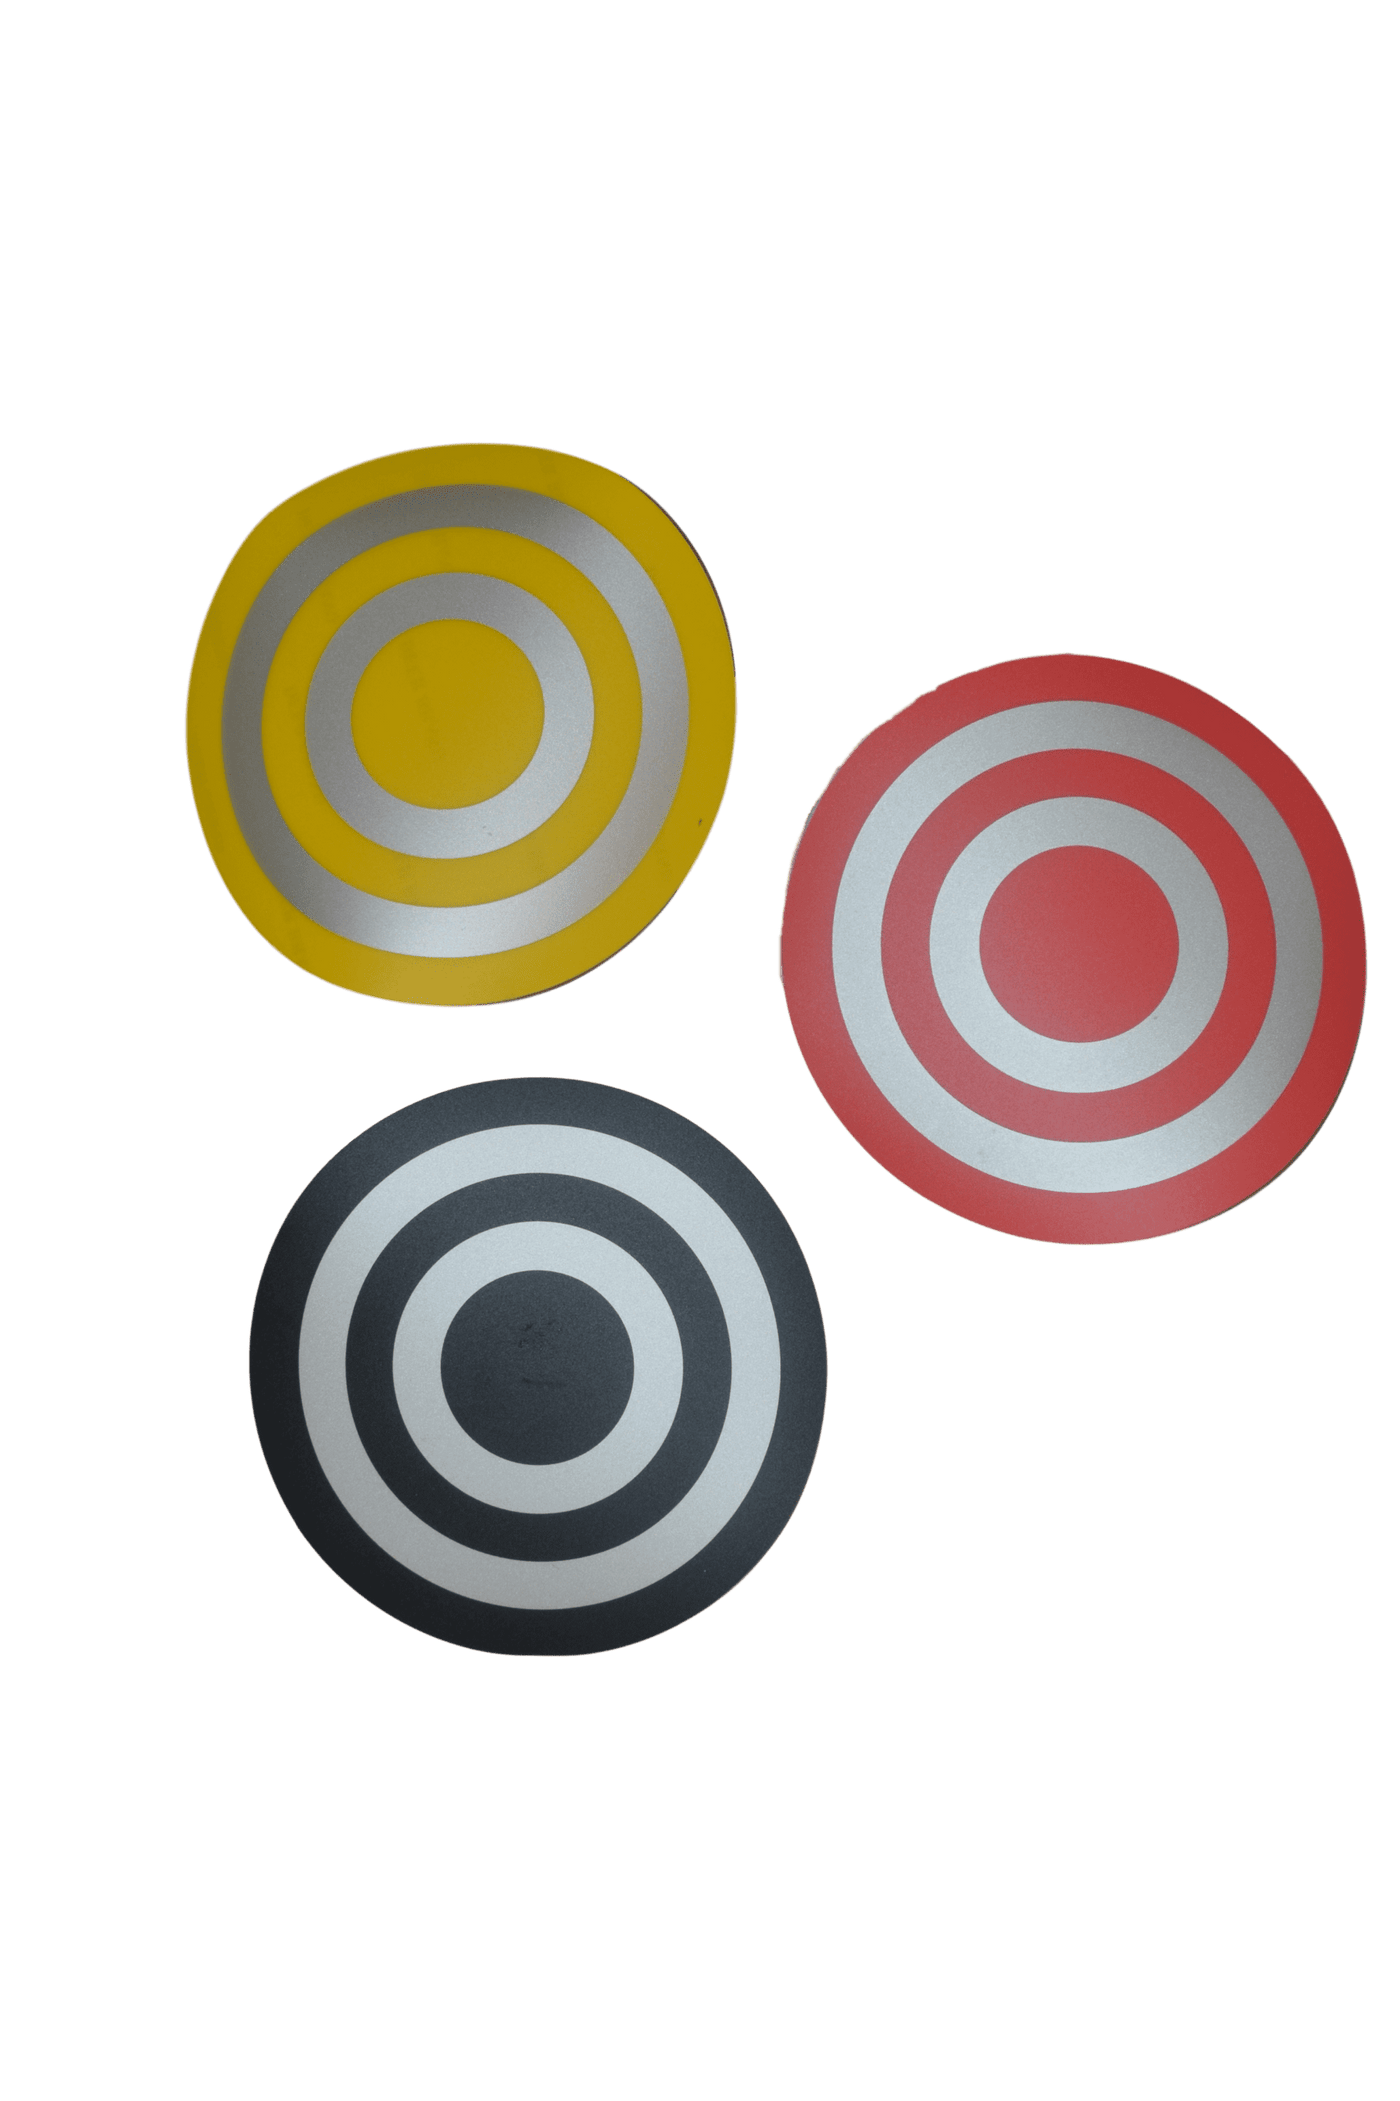 TargetAbs Target Stickers (Black, Yellow, Red).